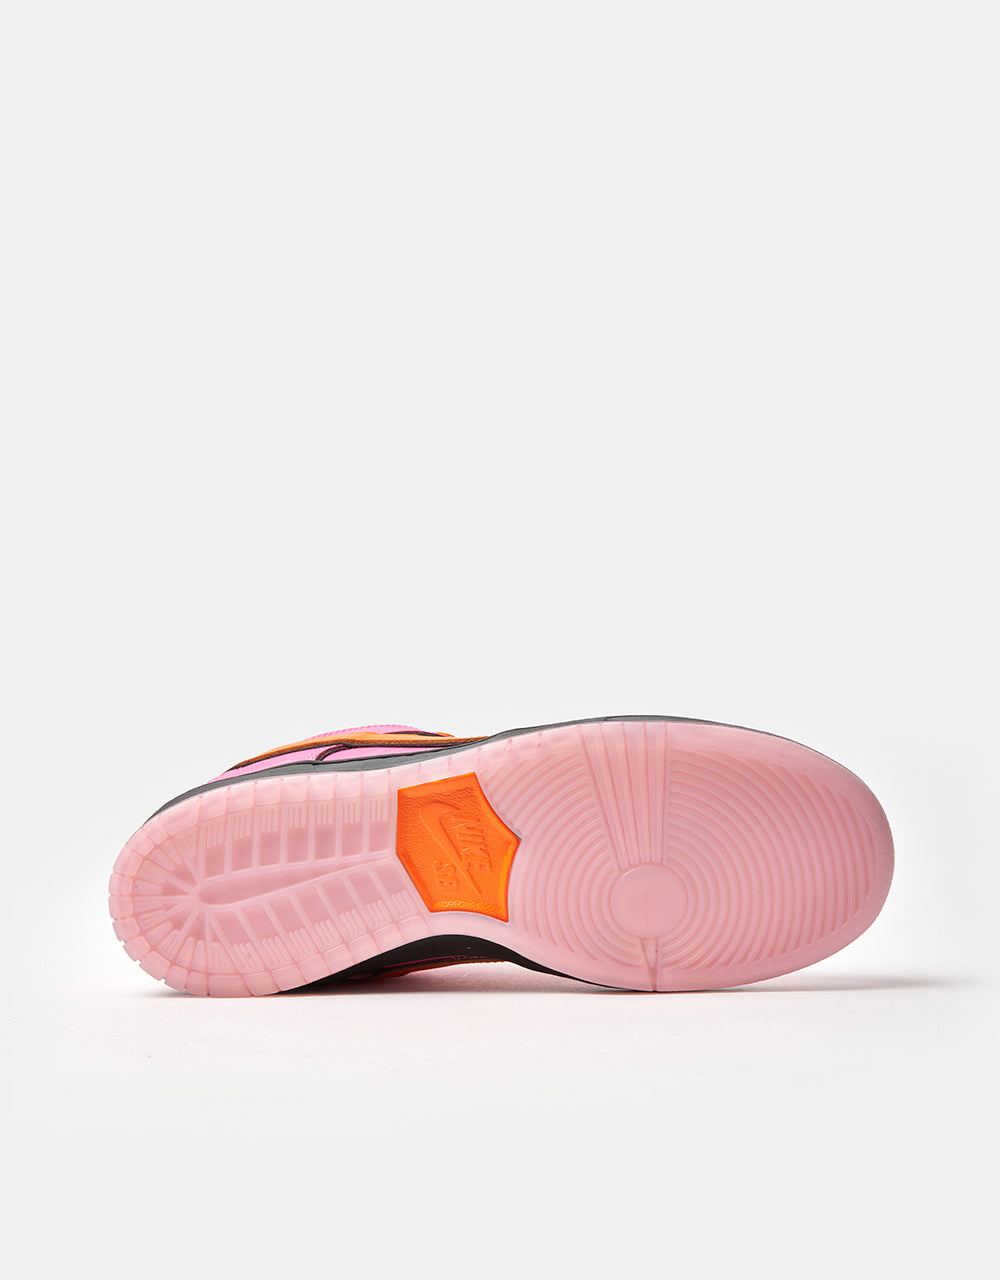 Nike SB x Powerpuff Girls 'Blossom' Dunk Low Pro QS Skate Shoes - Lotus Pink/Digital Pink-Med Soft Pink